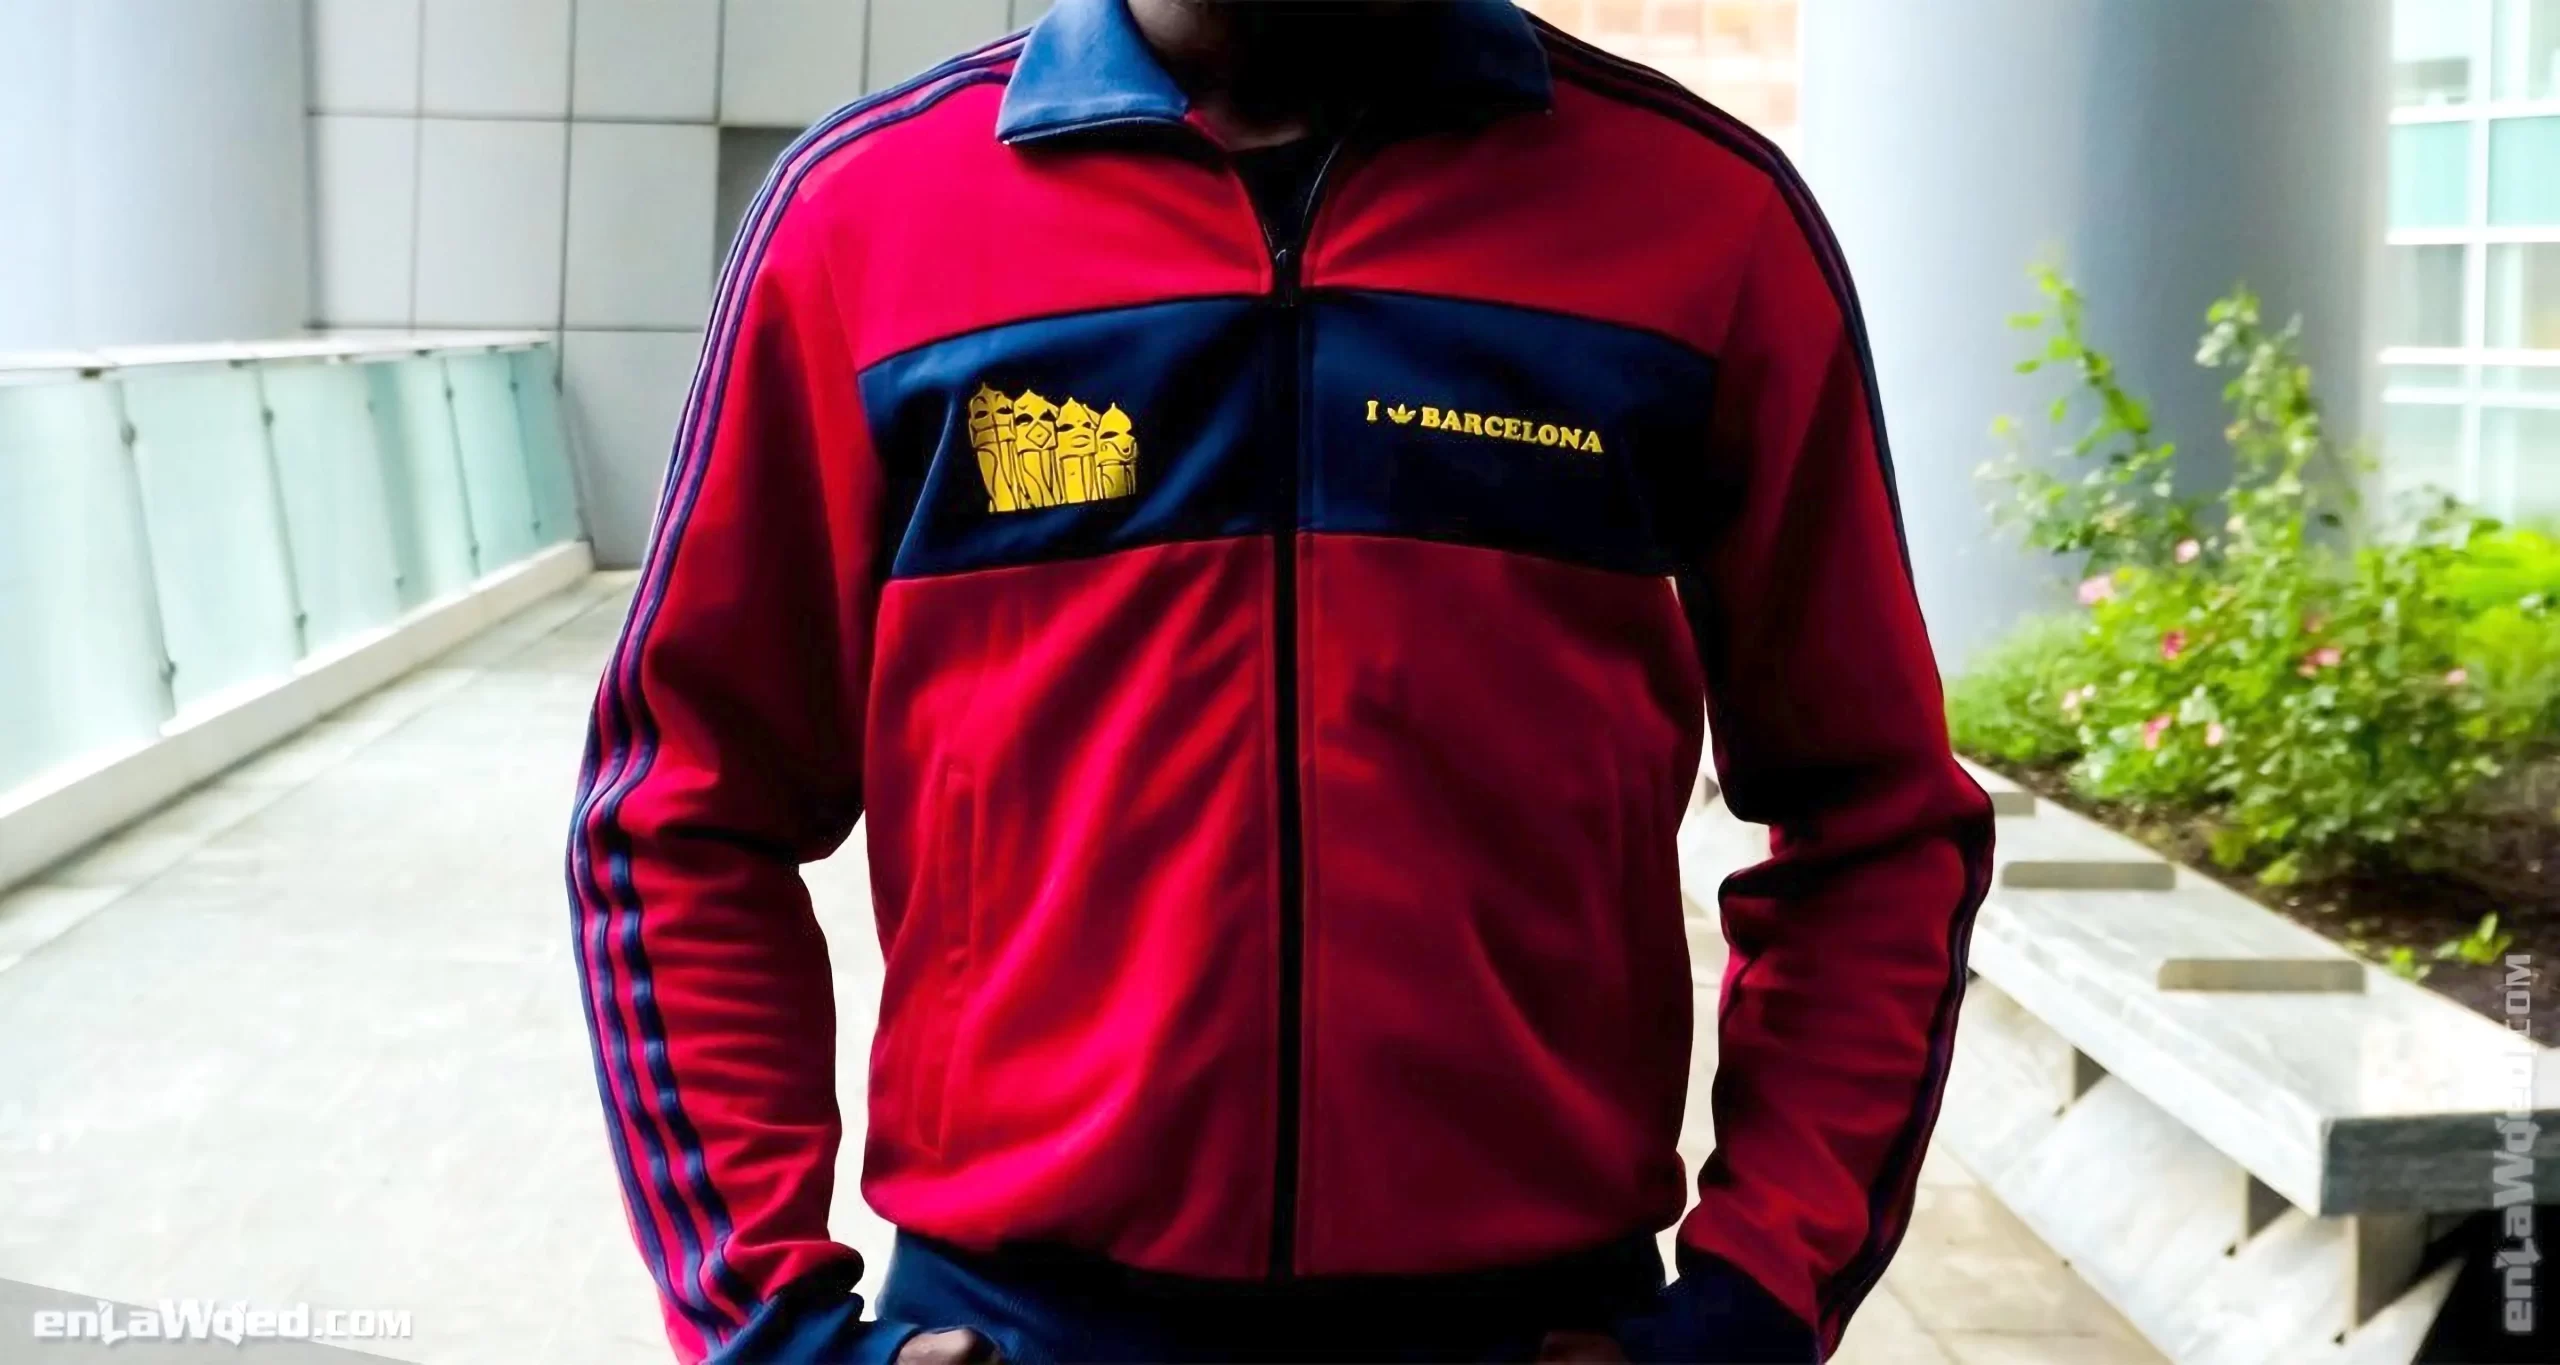 Men’s 2006 Barcelona TT-Two by Adidas Originals: Endorsed (EnLawded.com file #lmc565odiskx8k71yqk)